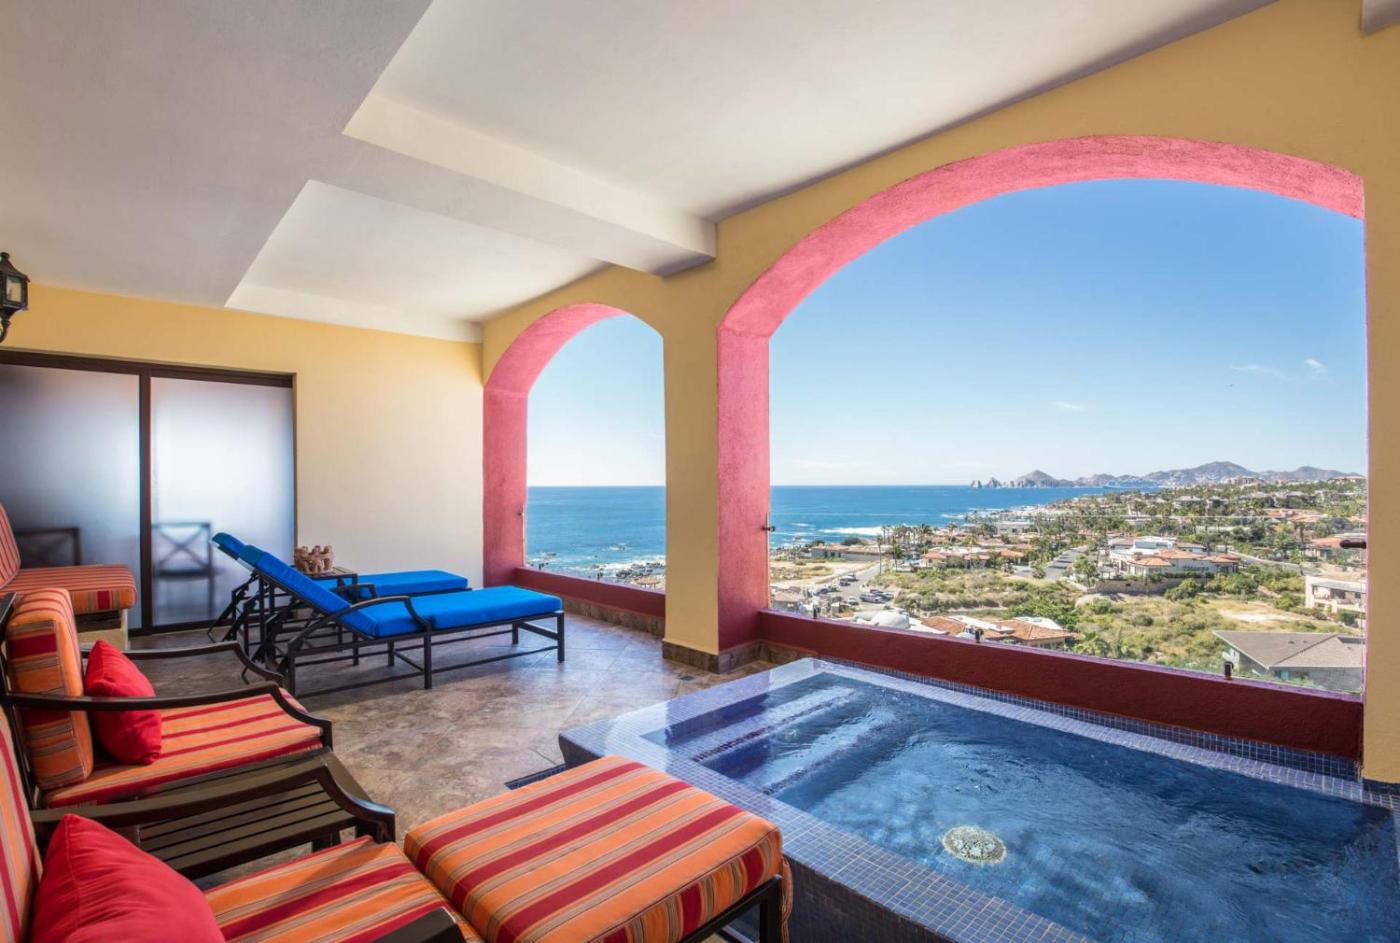 Hotel with private pool - El Encanto All Inclusive Resort